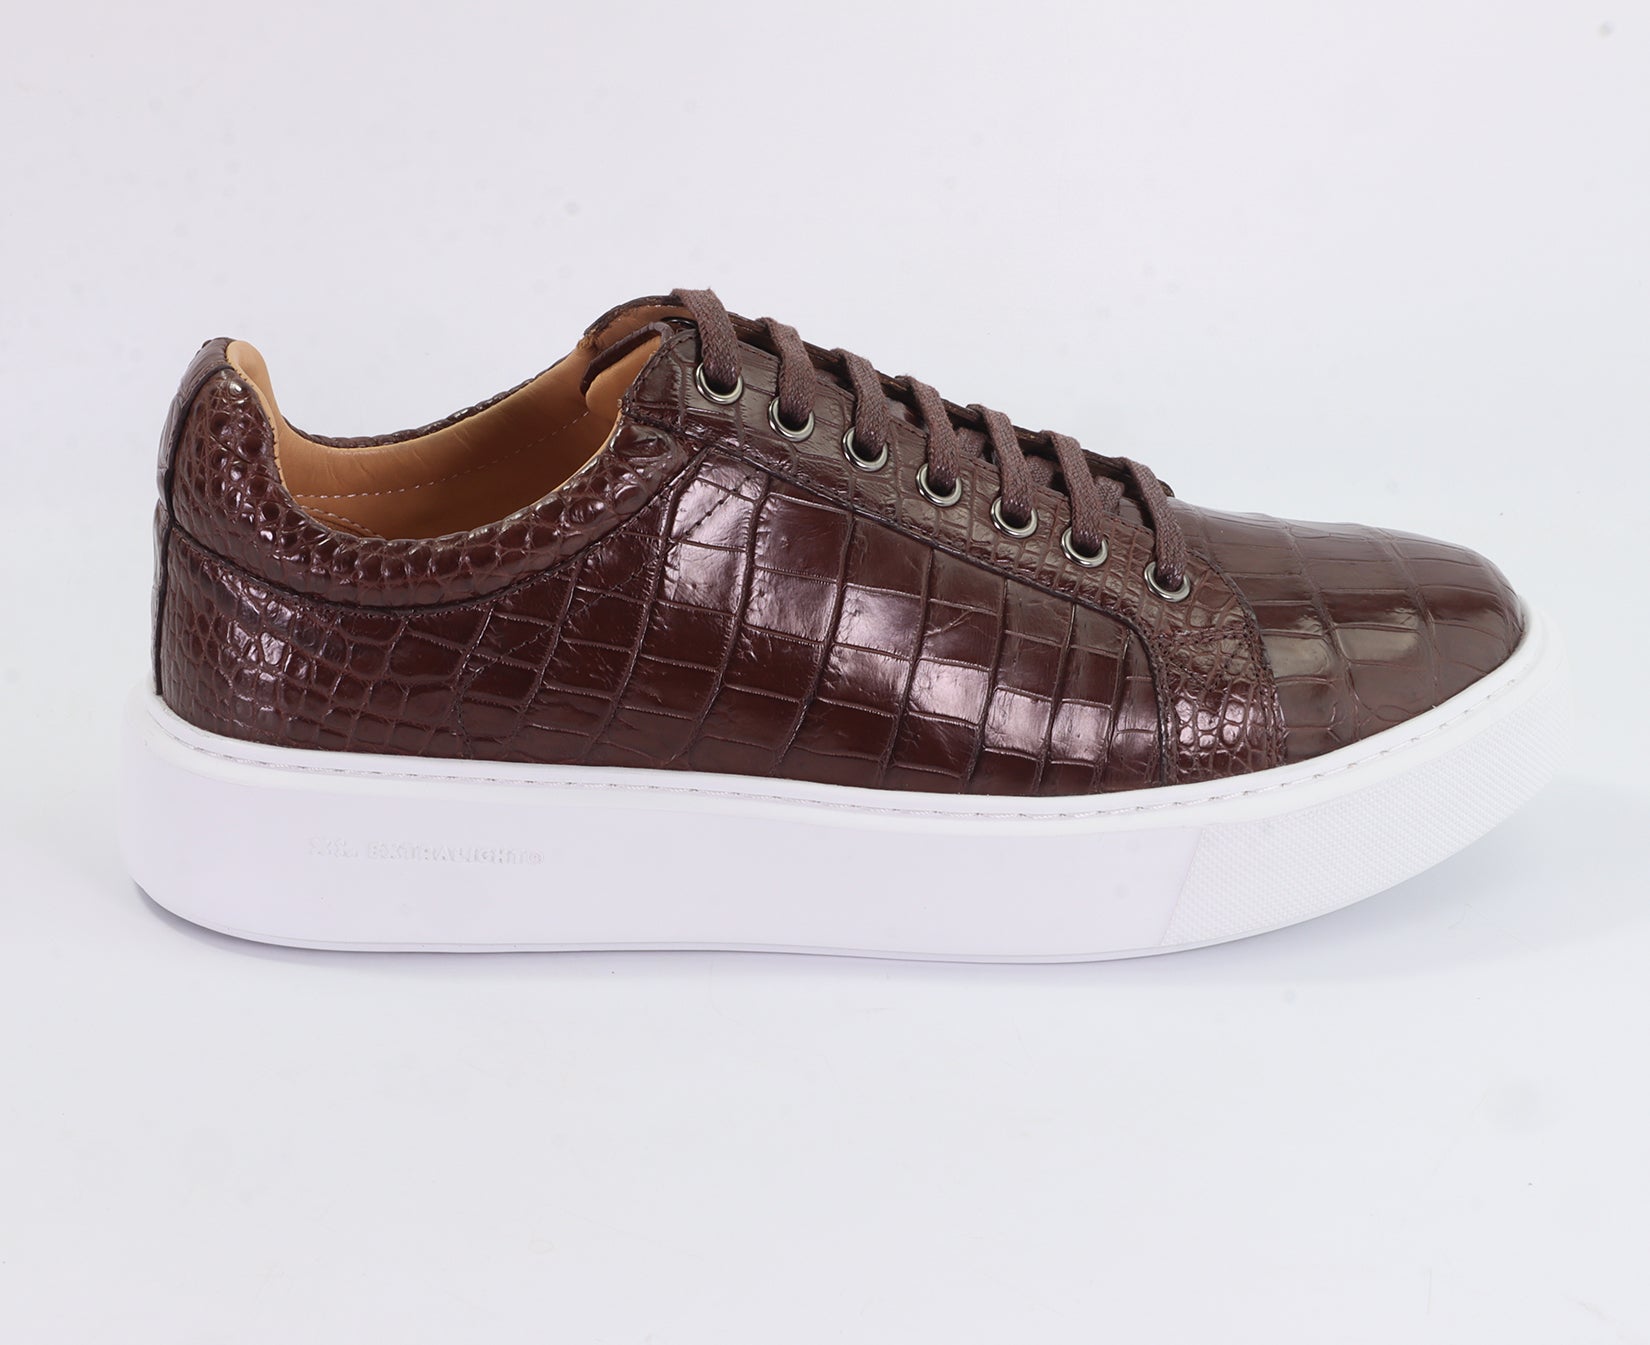 Men's Shoes Genuine Crocodile Alligator Skin Leather Color Dark Brown #S1833